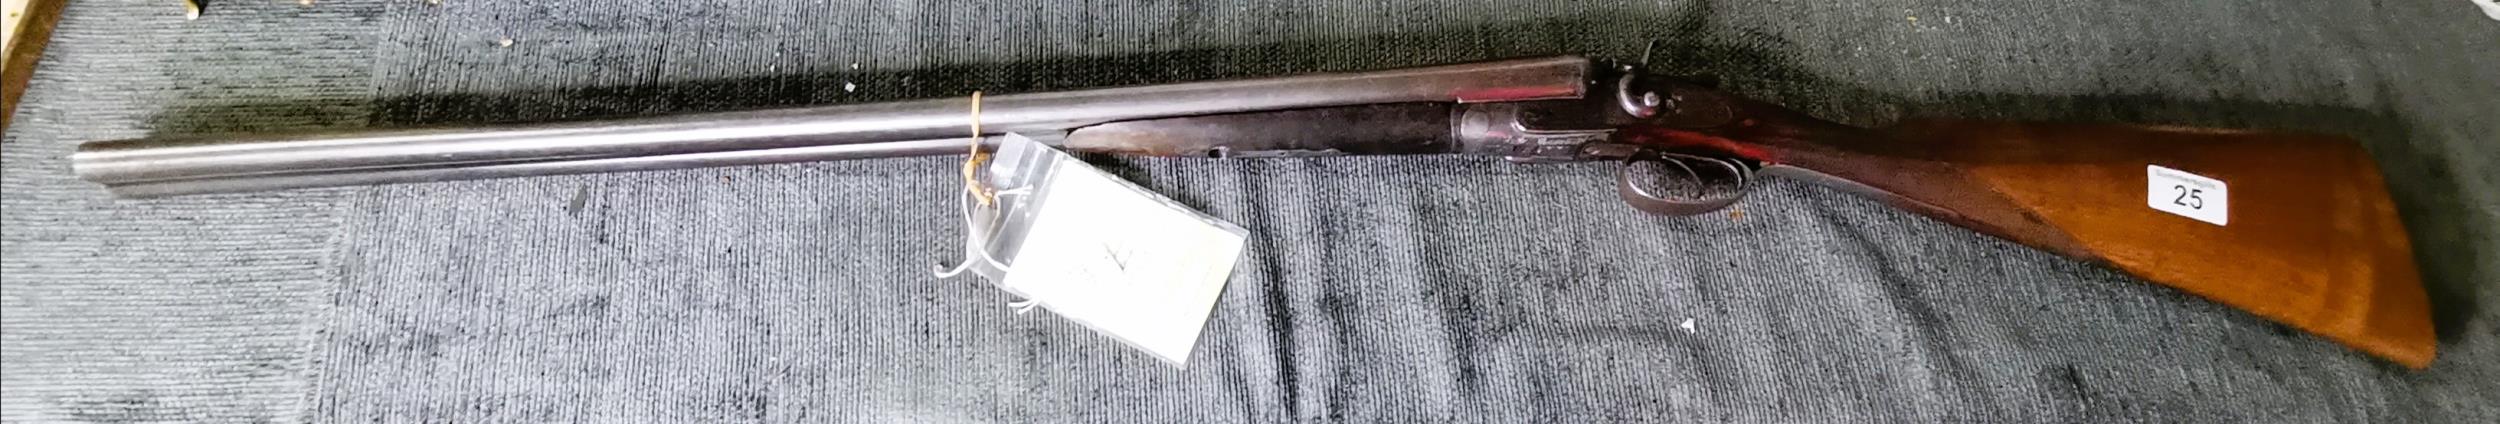 James B Waranlow 12 Bore double barrel Shotgun - 1880's (deactivated ) - Image 2 of 4